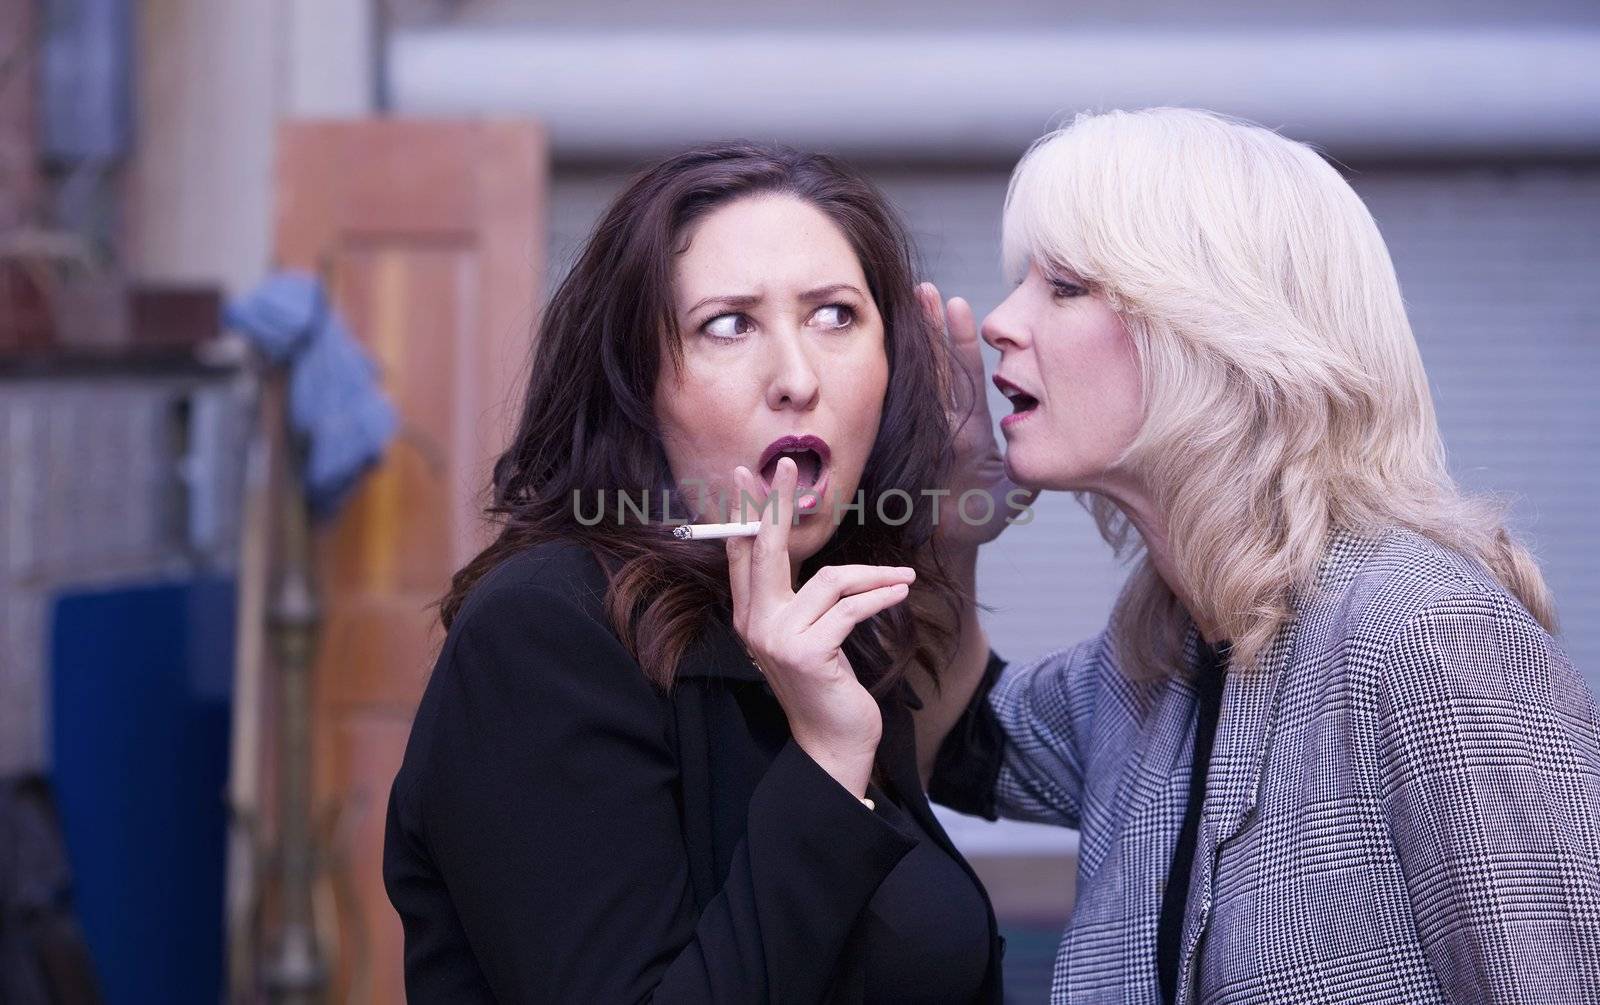 Women Gossip During a Smoking Break by Creatista